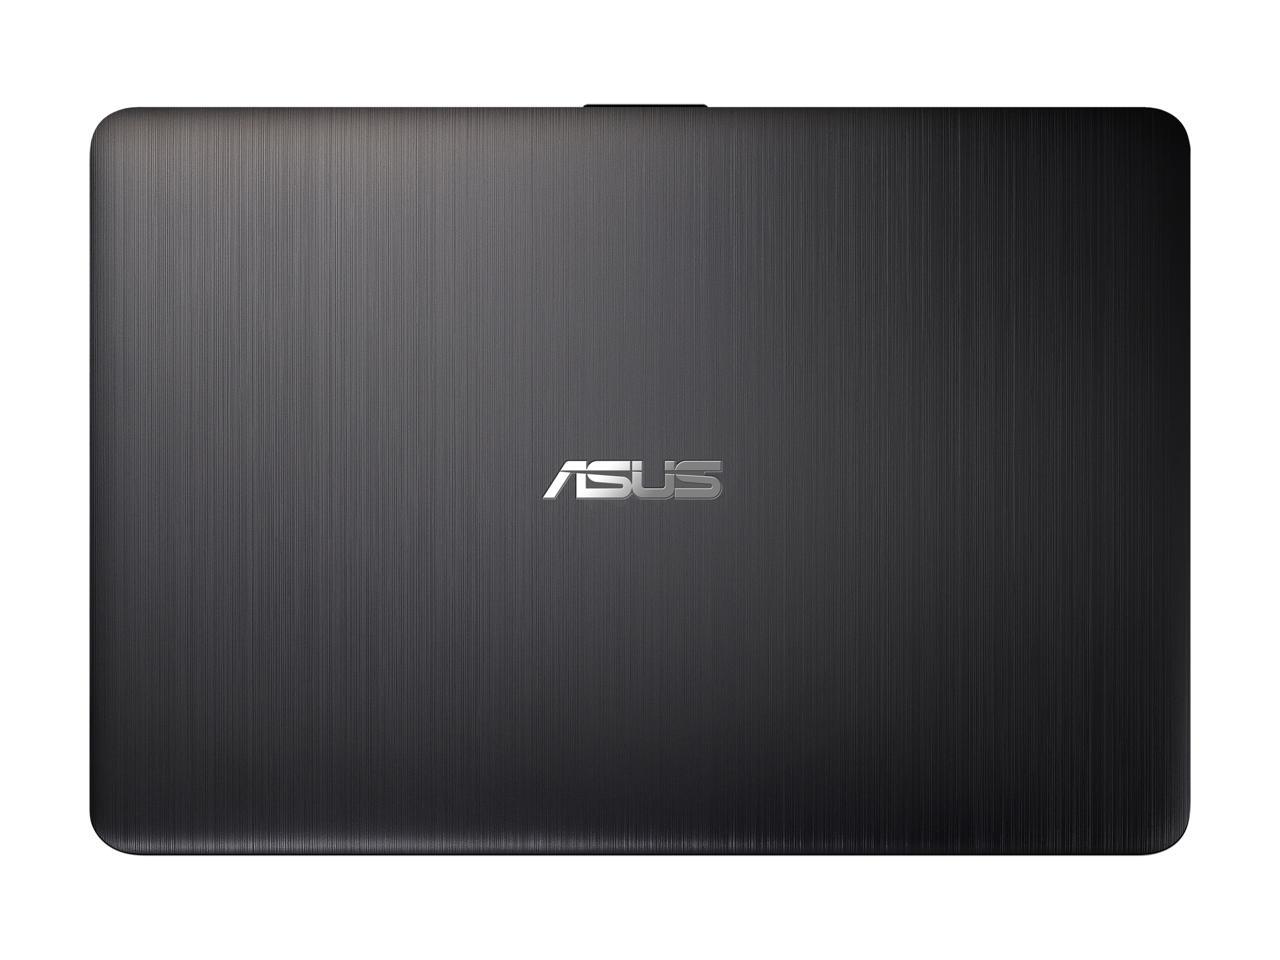 ASUS VivoBook AMD A9-9425 Dual Core Processor 14